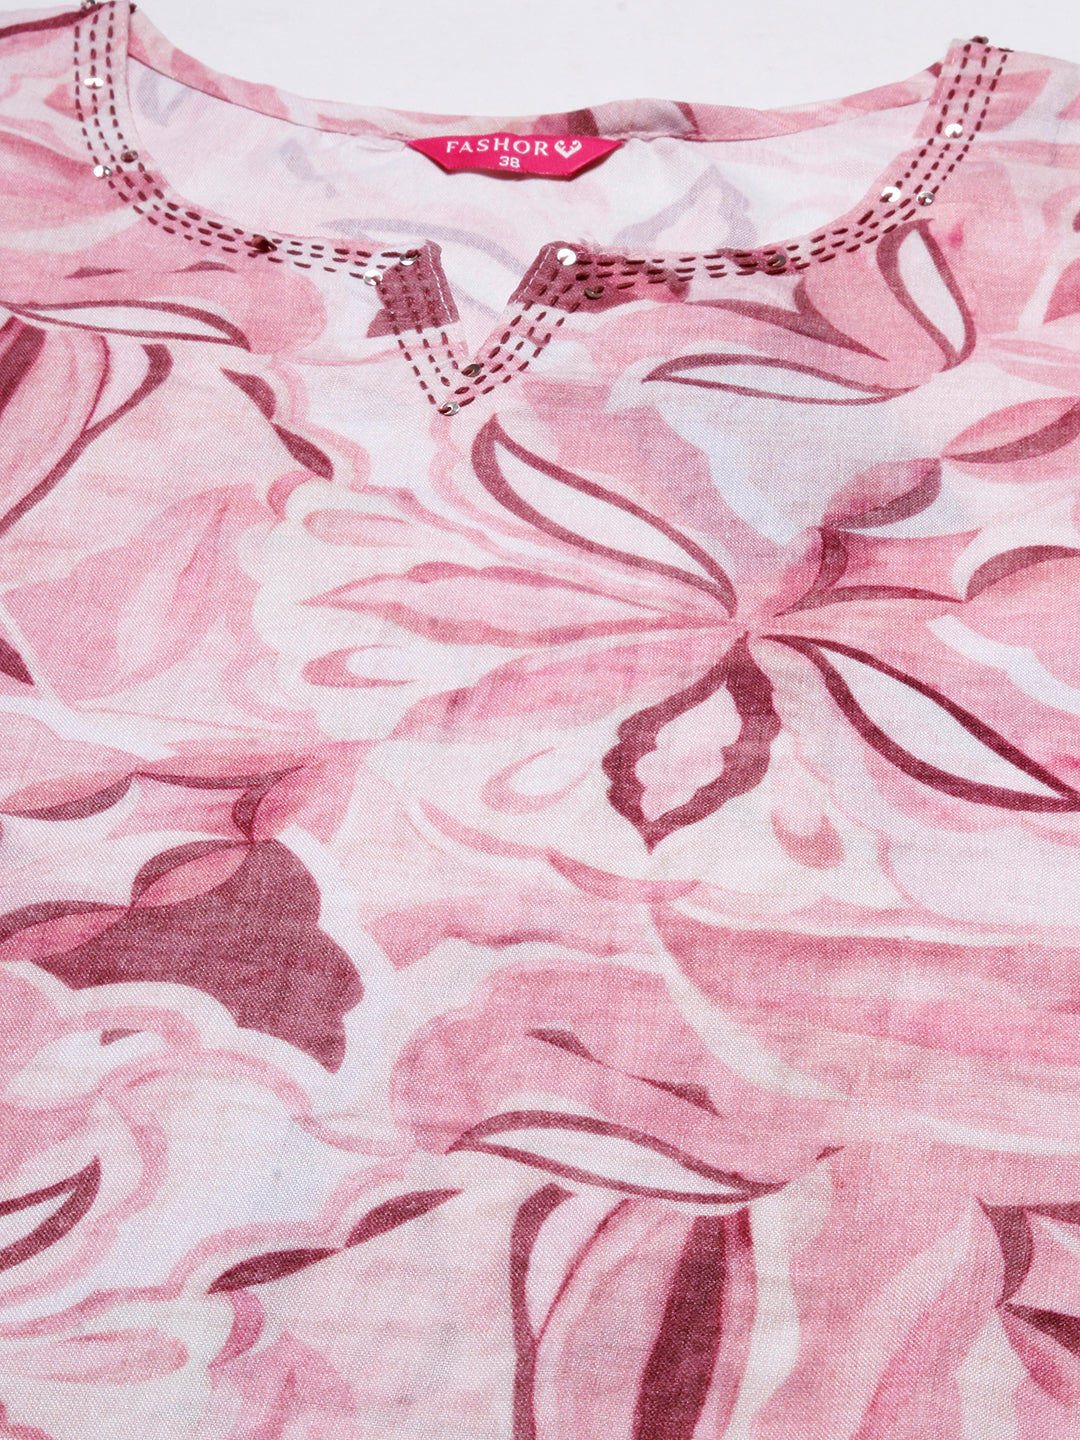 Abstract Printed Sequins & Resham Embroidered Linen Blend Kurta - Pink